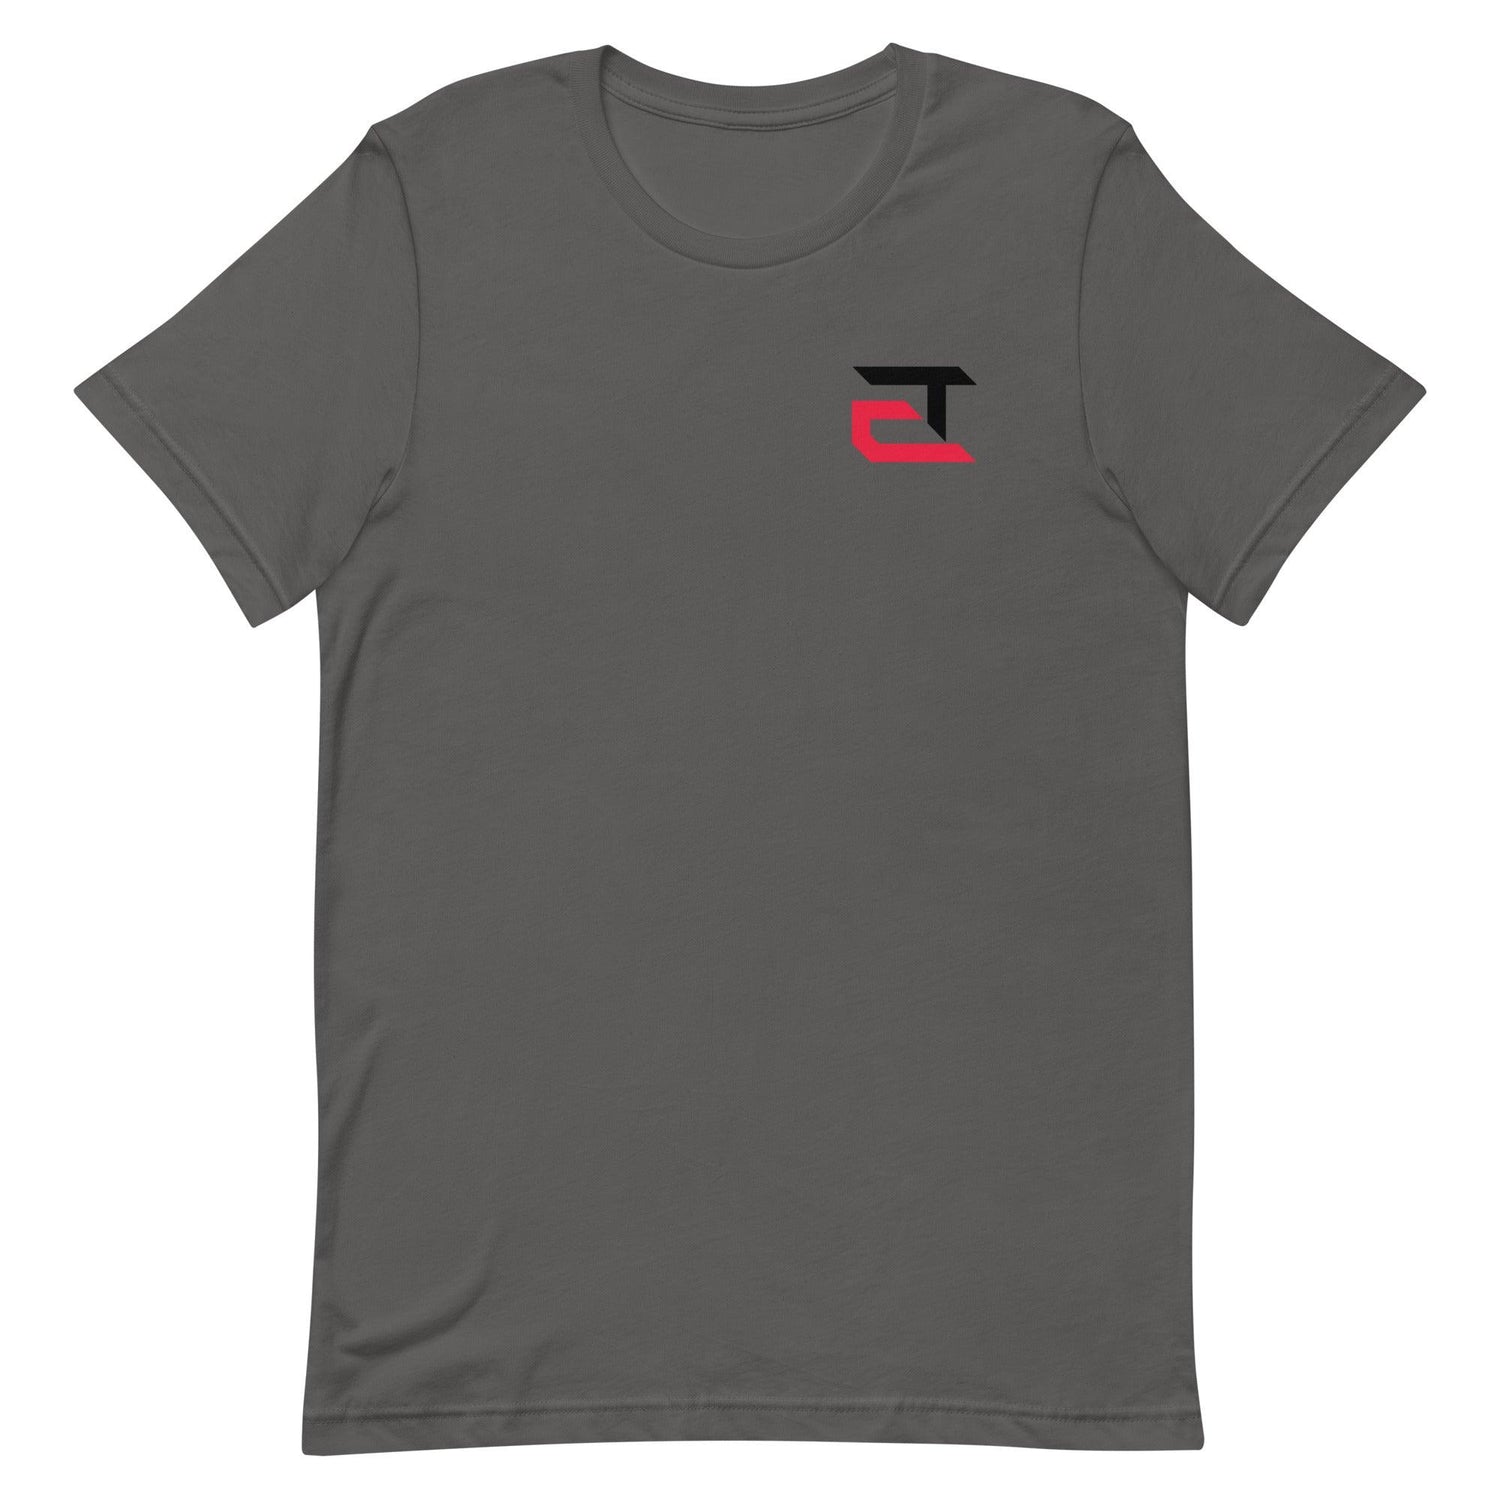 Evan Tengesdahl "Essential" t-shirt - Fan Arch